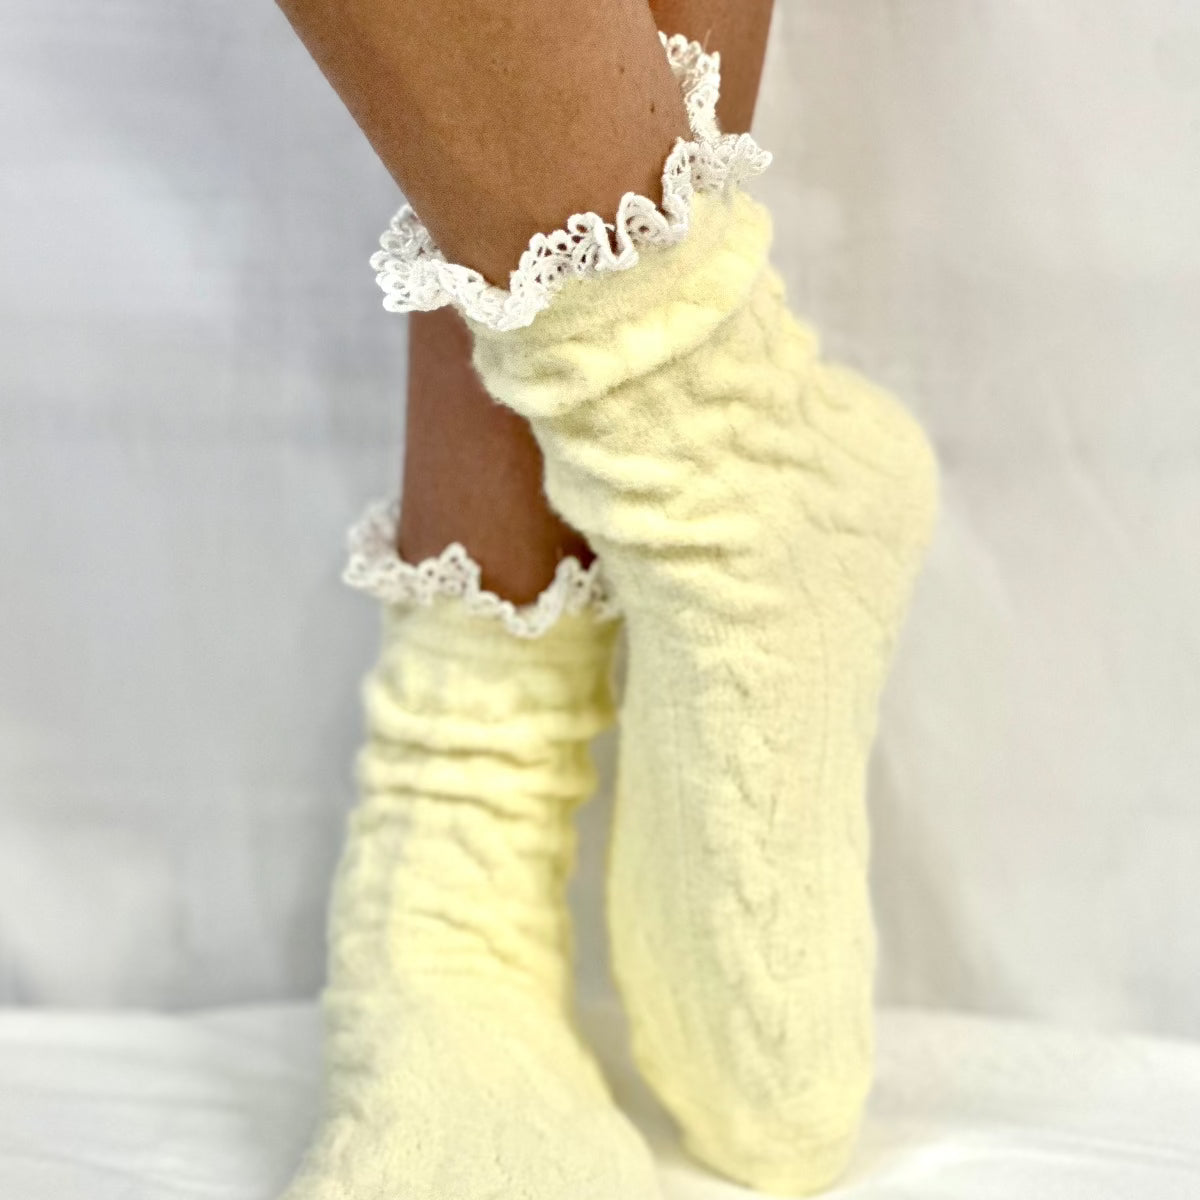 Heavenly ultra lux socks women, slipper socks ladies, gift socks women's.